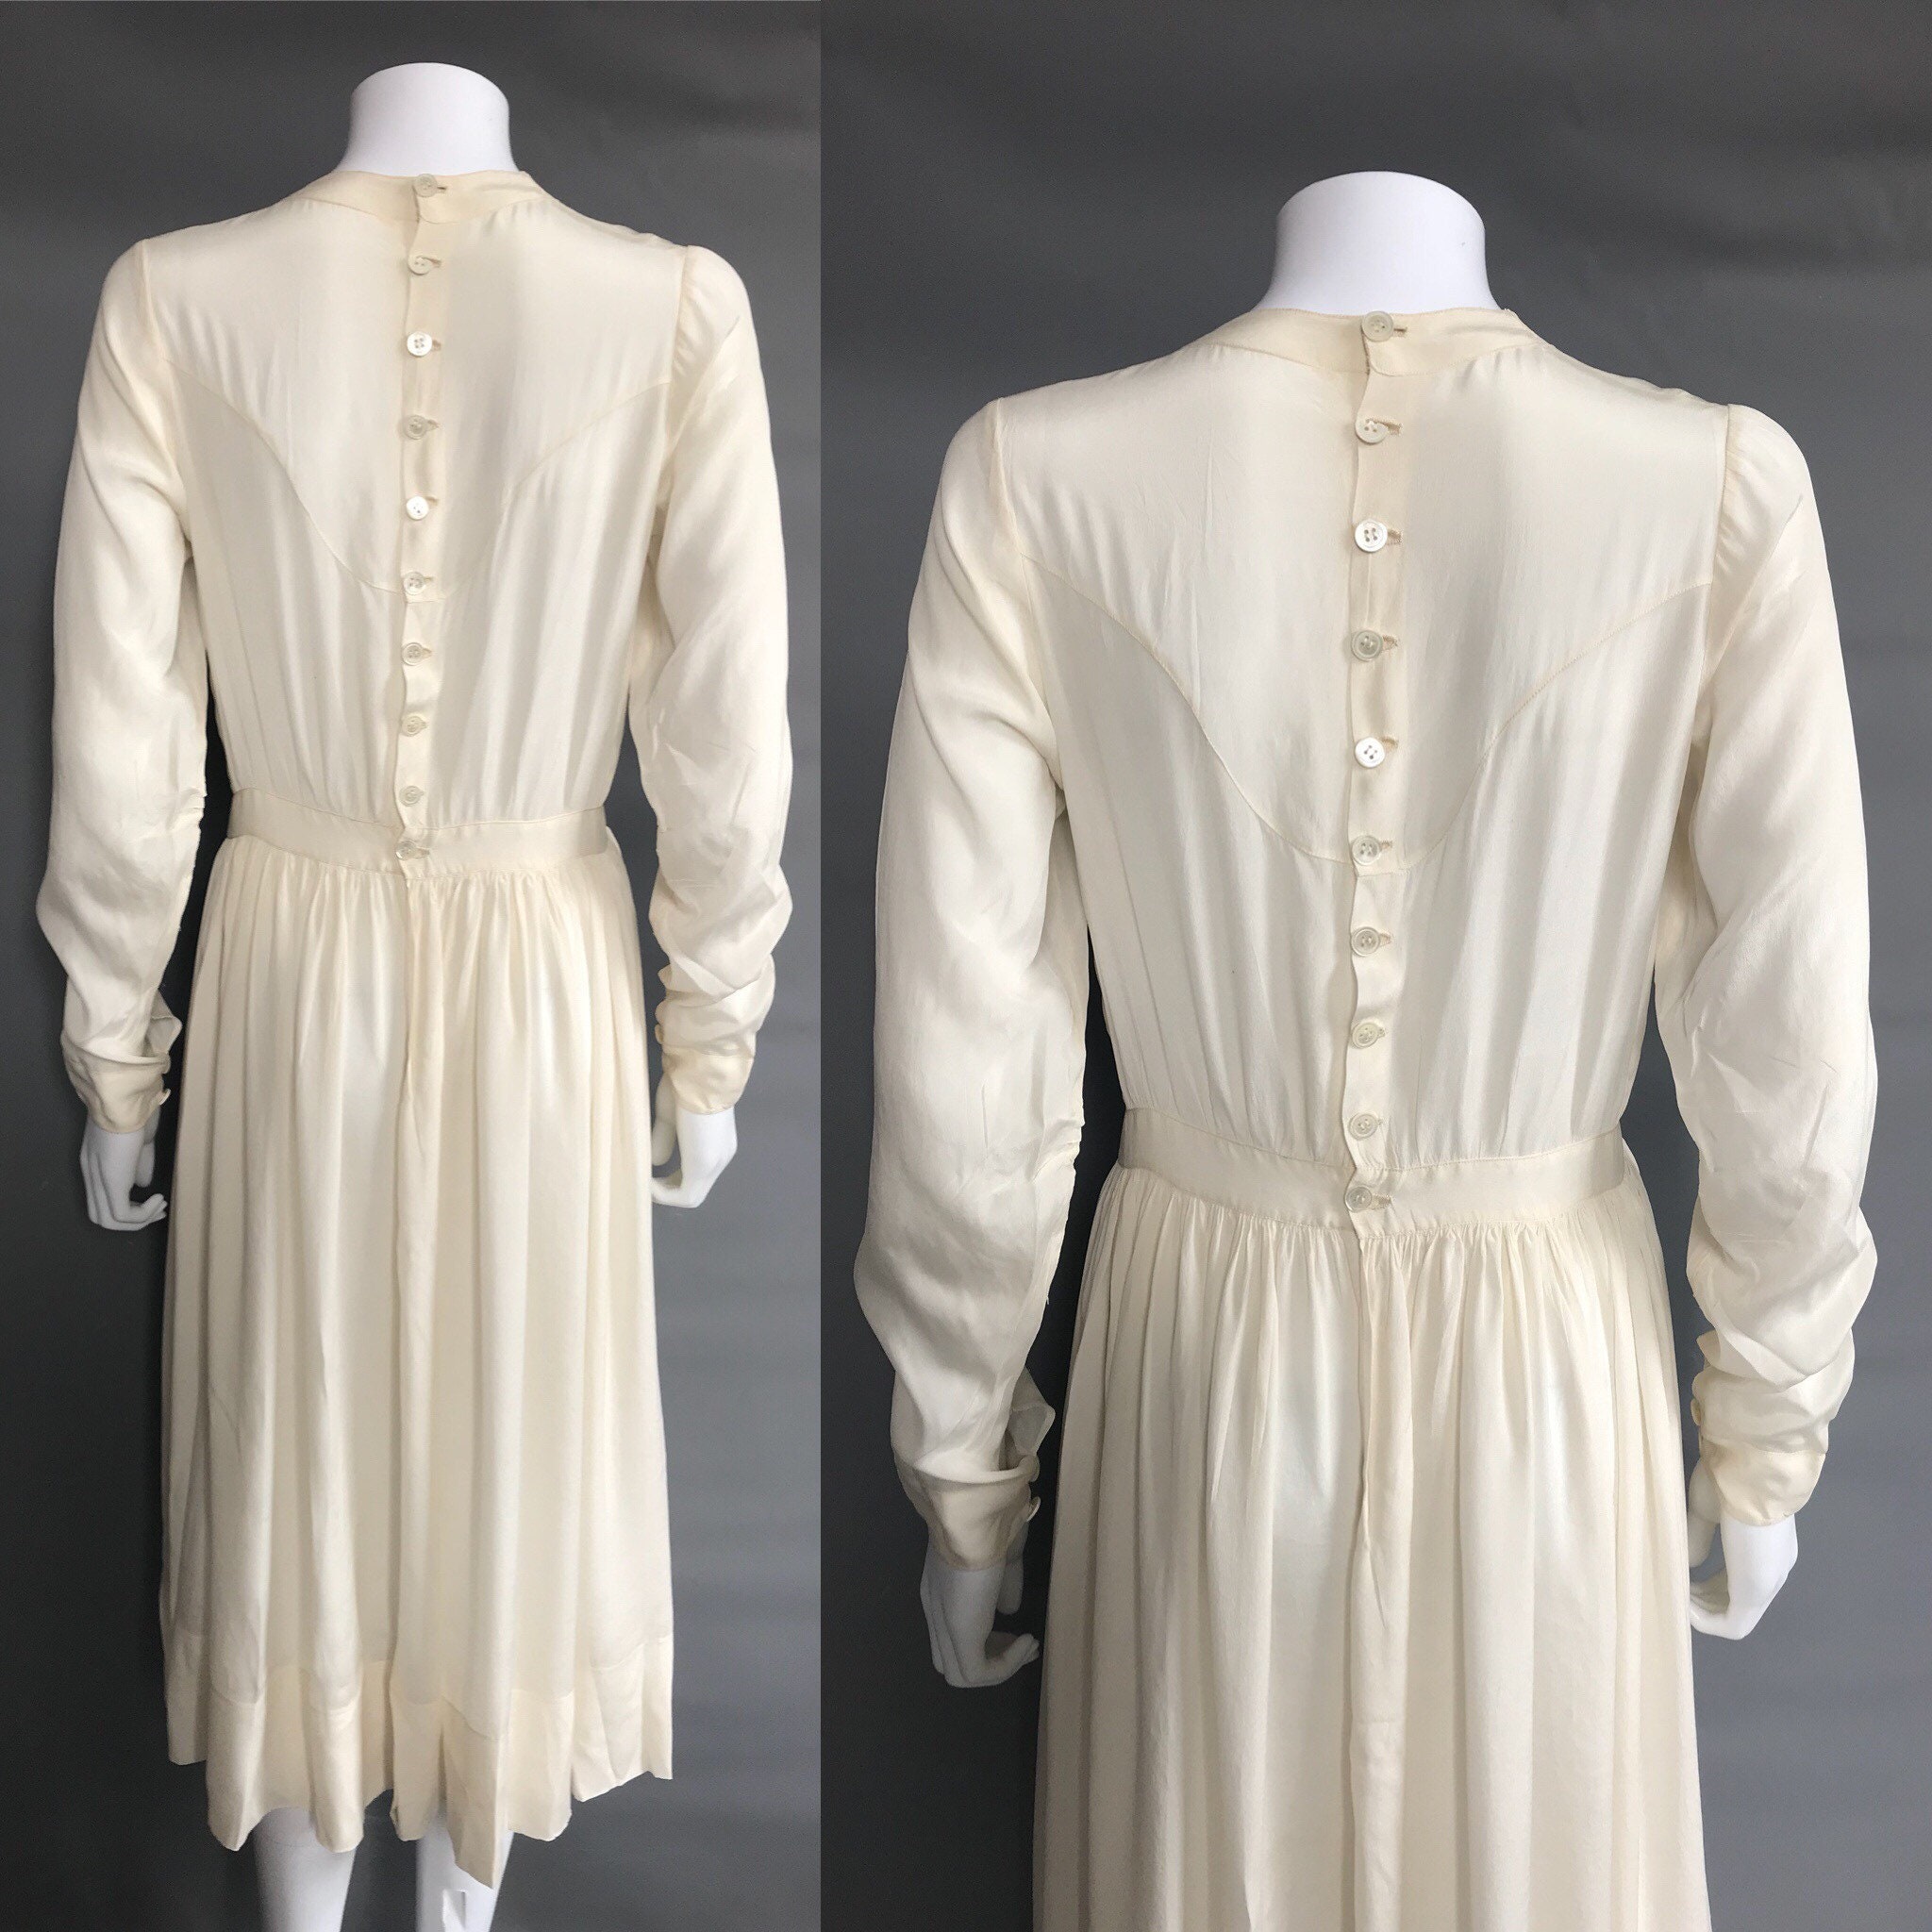 Early 1920s wedding dress in ivory silk | Etsy